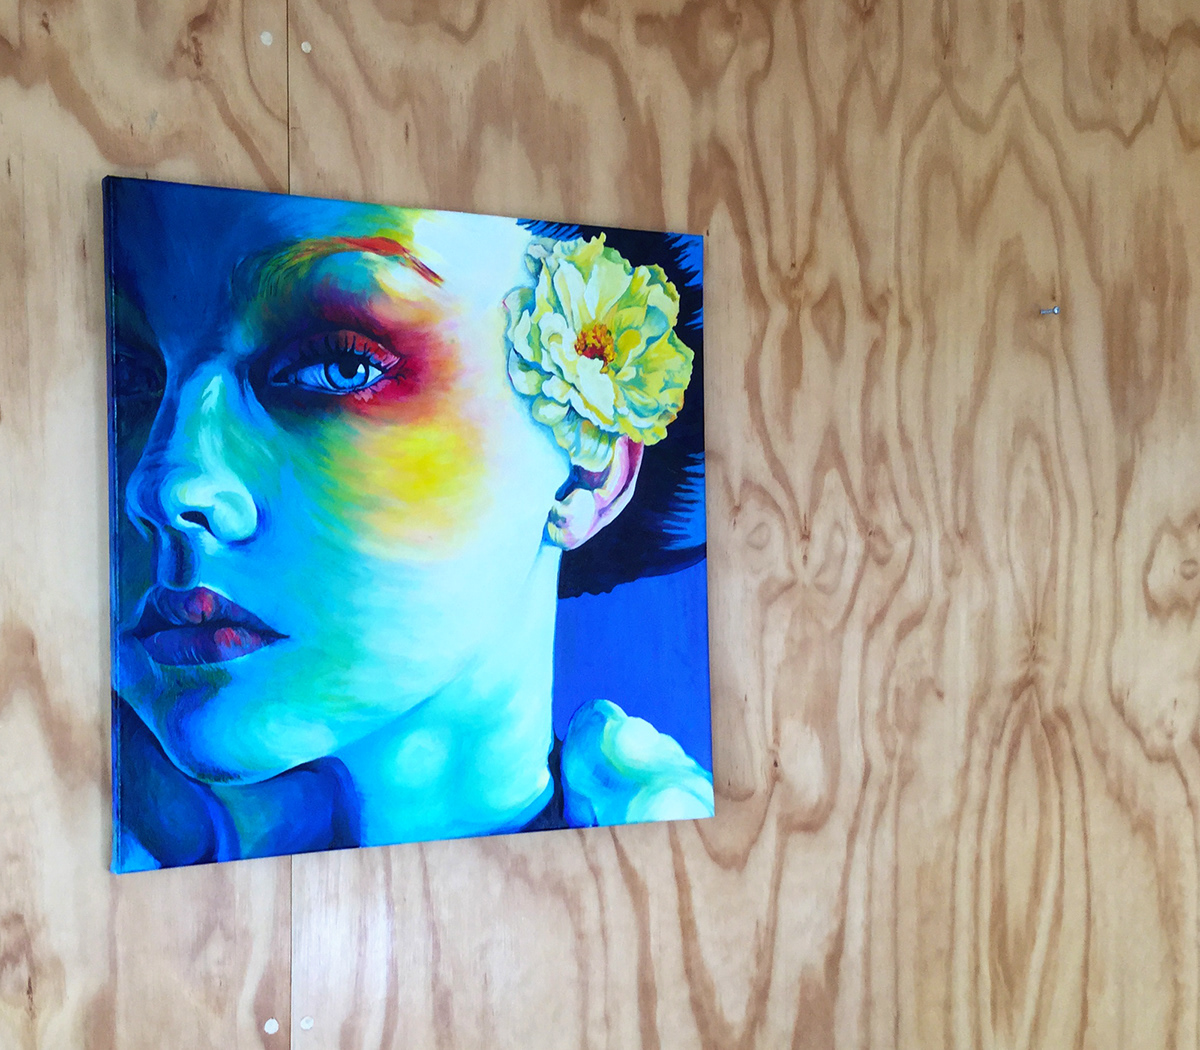 FINEART contemporaryart oilpainting portraitpainting eye portrait flower art woman Exhibition  Oils canvas popart